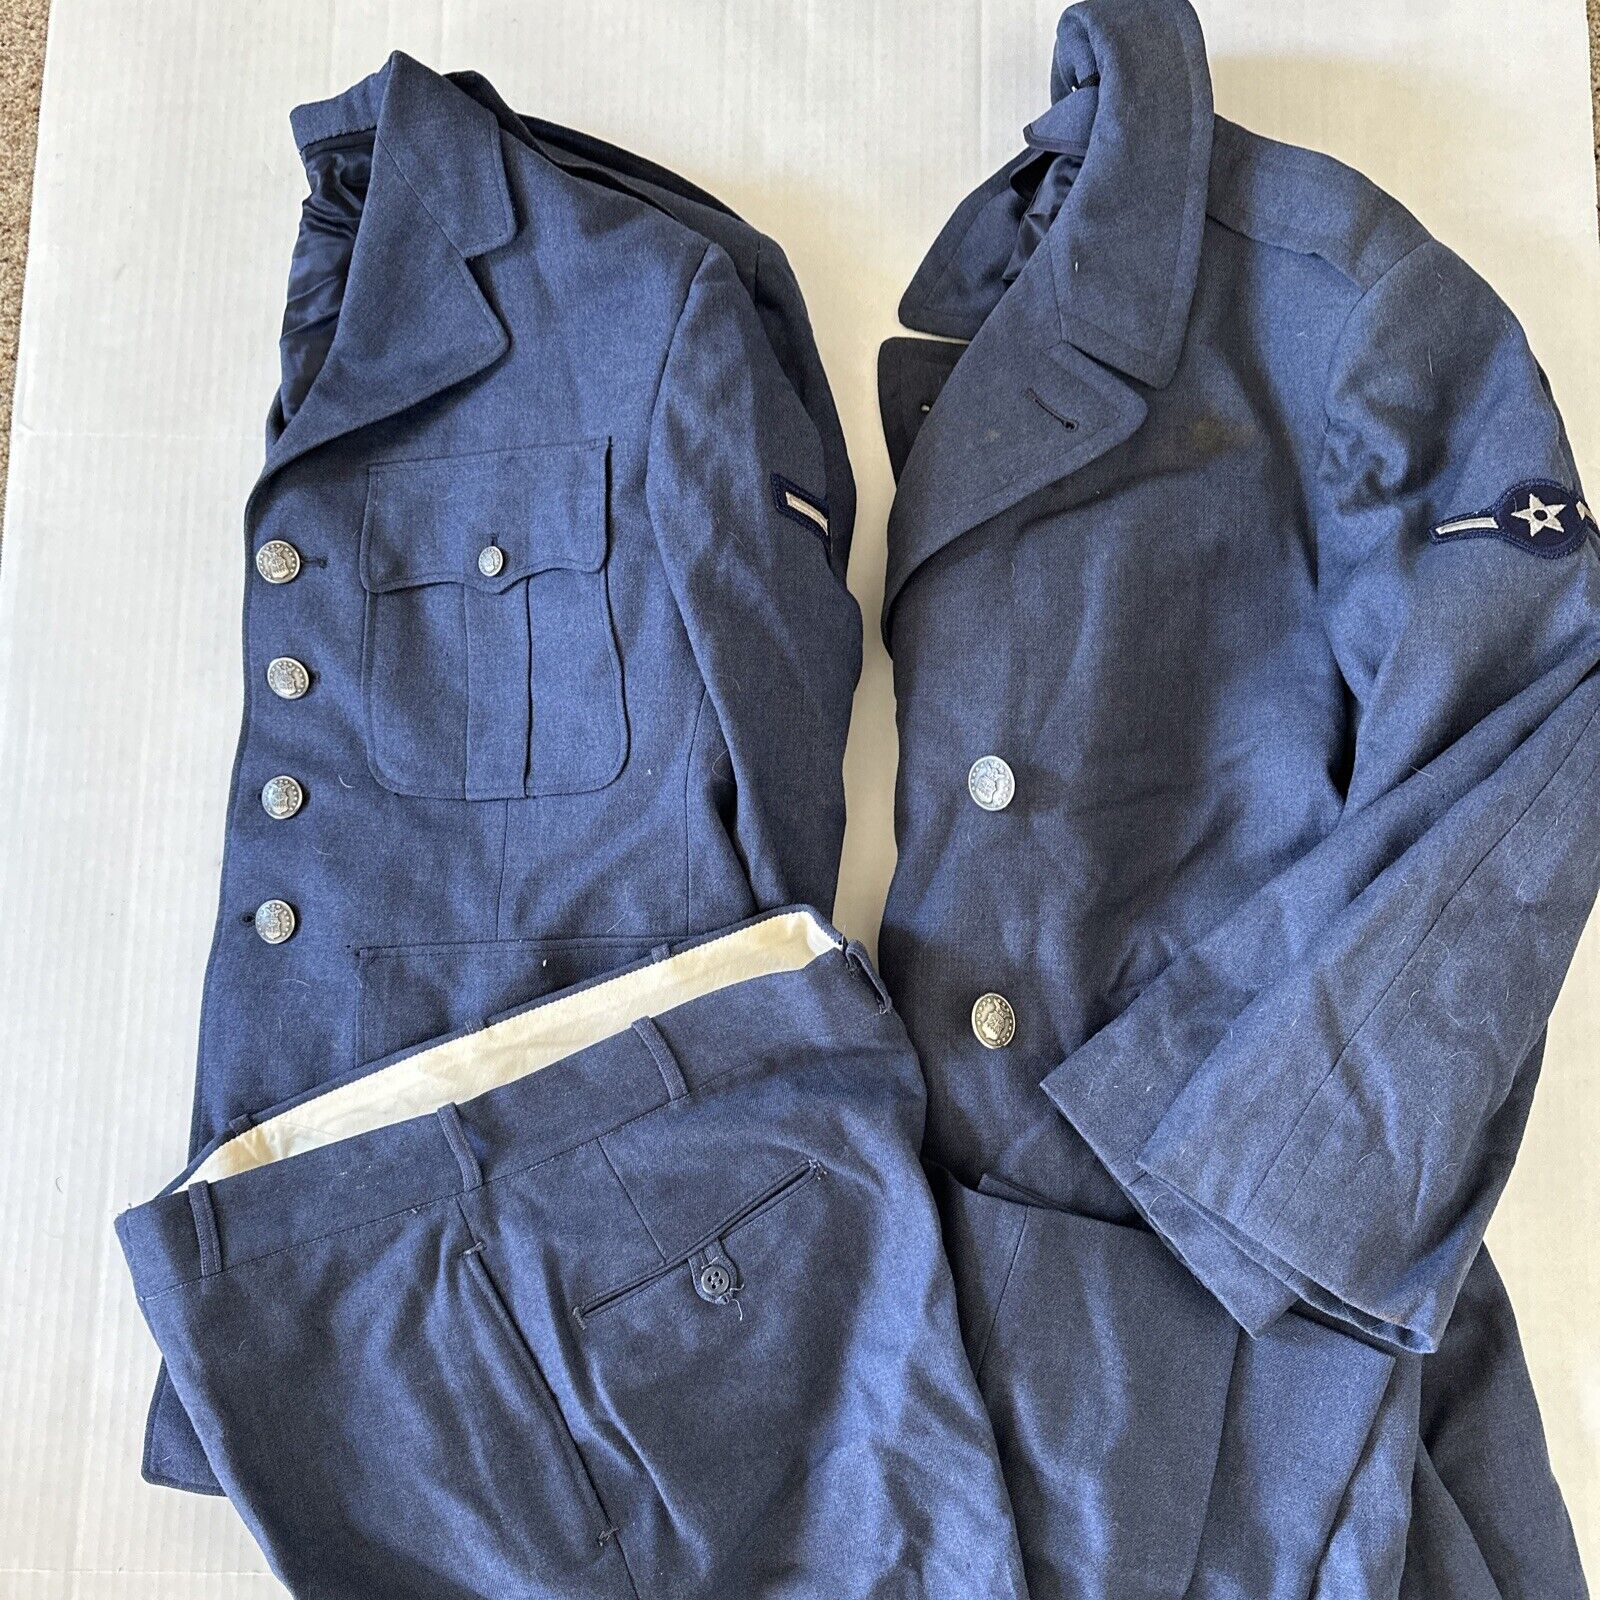 VTG Air Force Serge Blue 1084 Wool Uniform 3 Piece, (2) Jackets & Pants 34x32